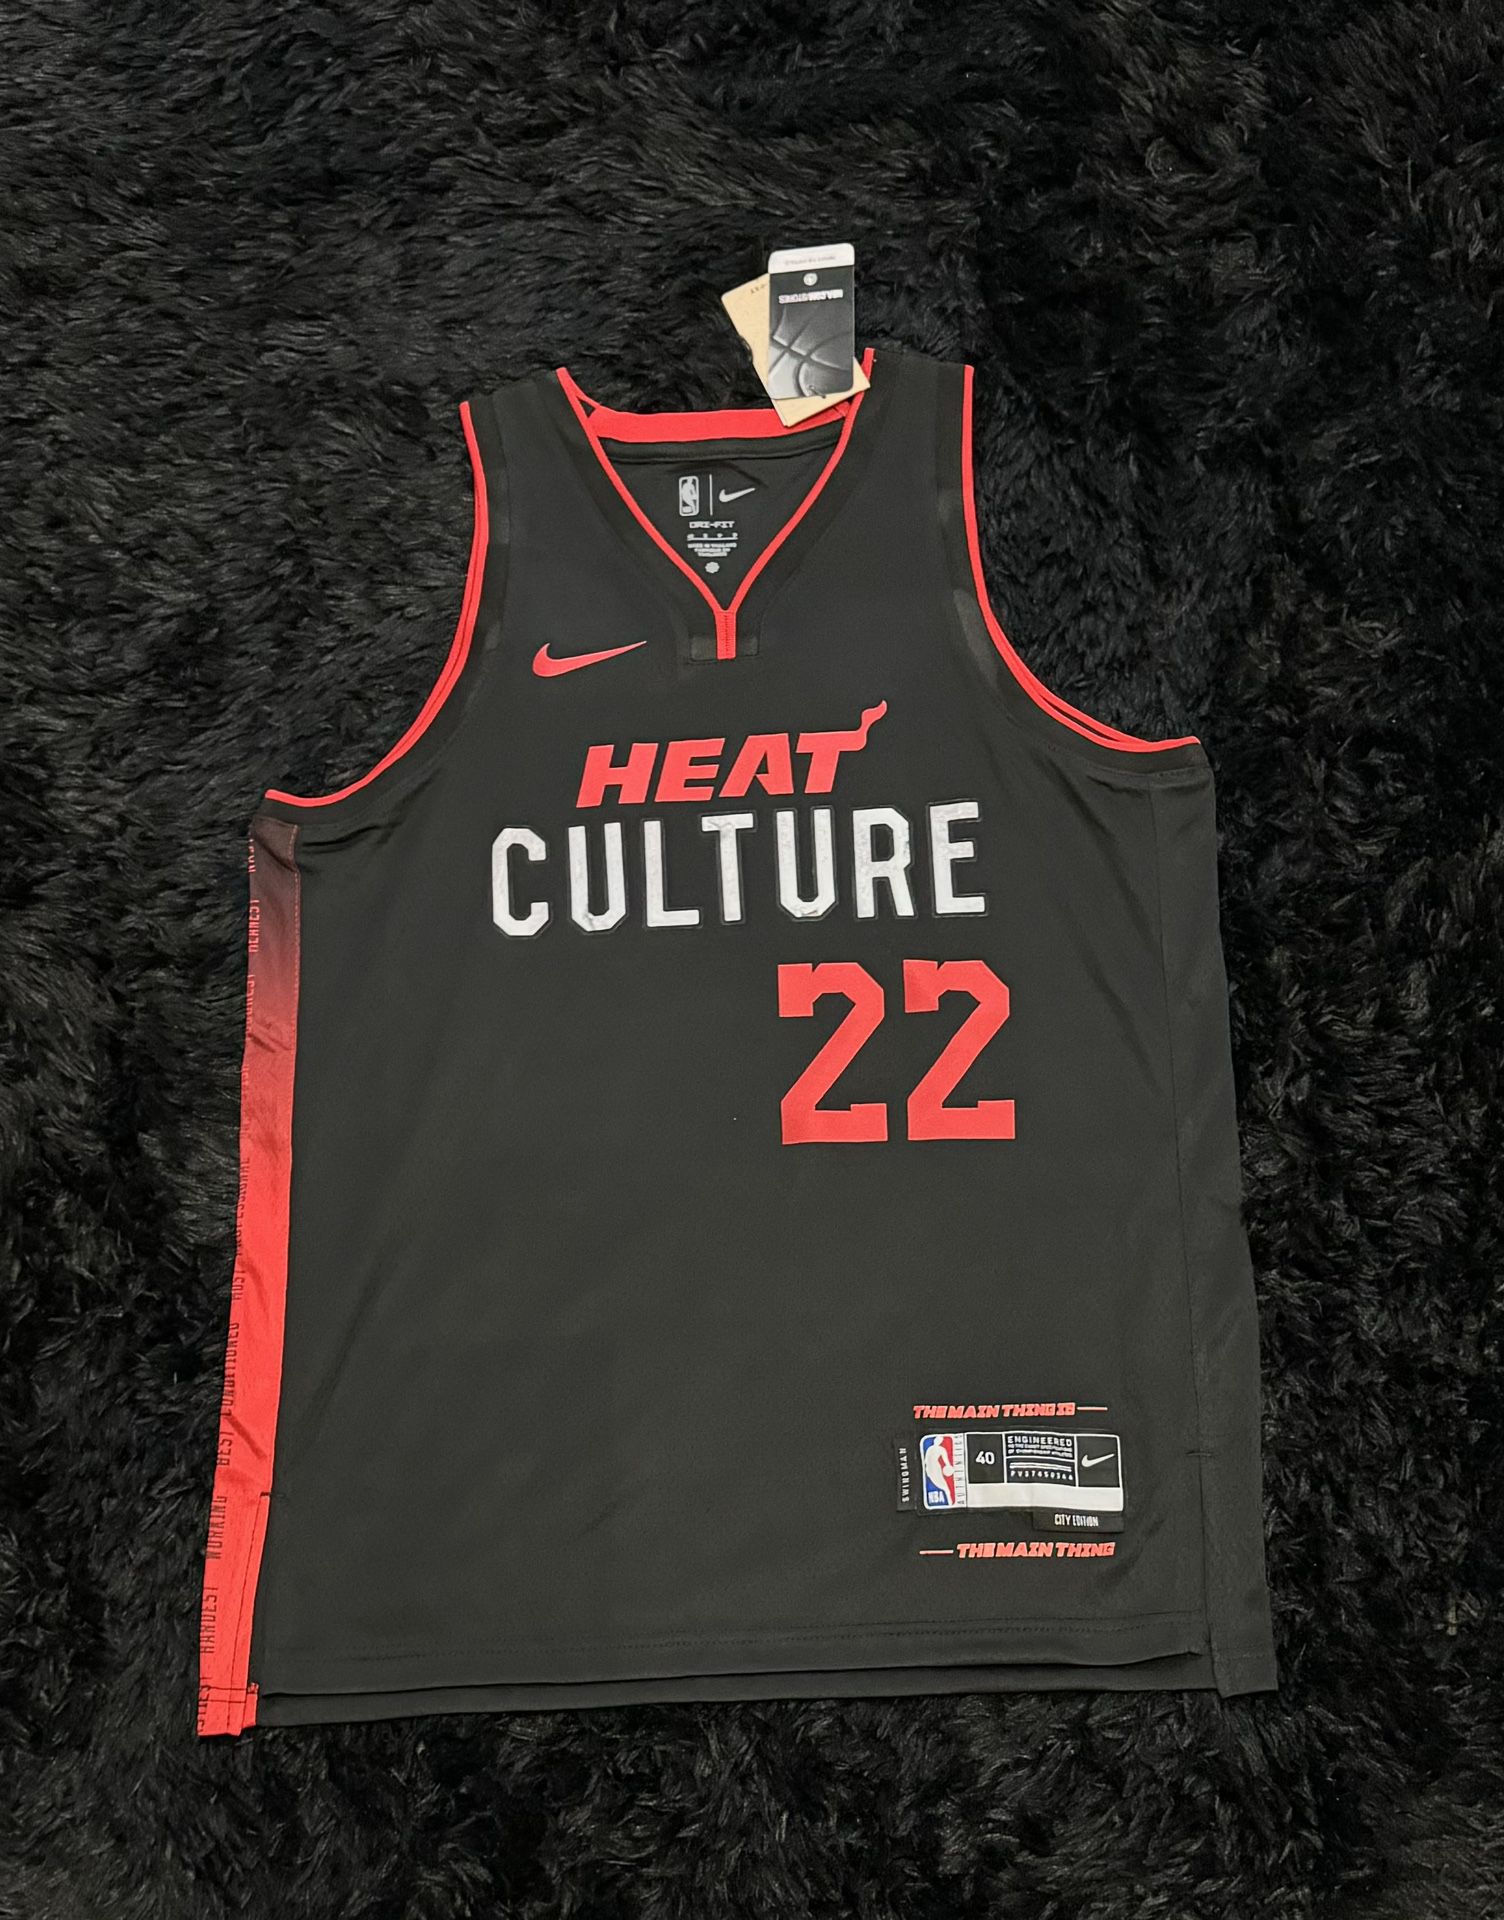 Miami Heat CULTURE Jimmy Butler #22 Basketball Jersey